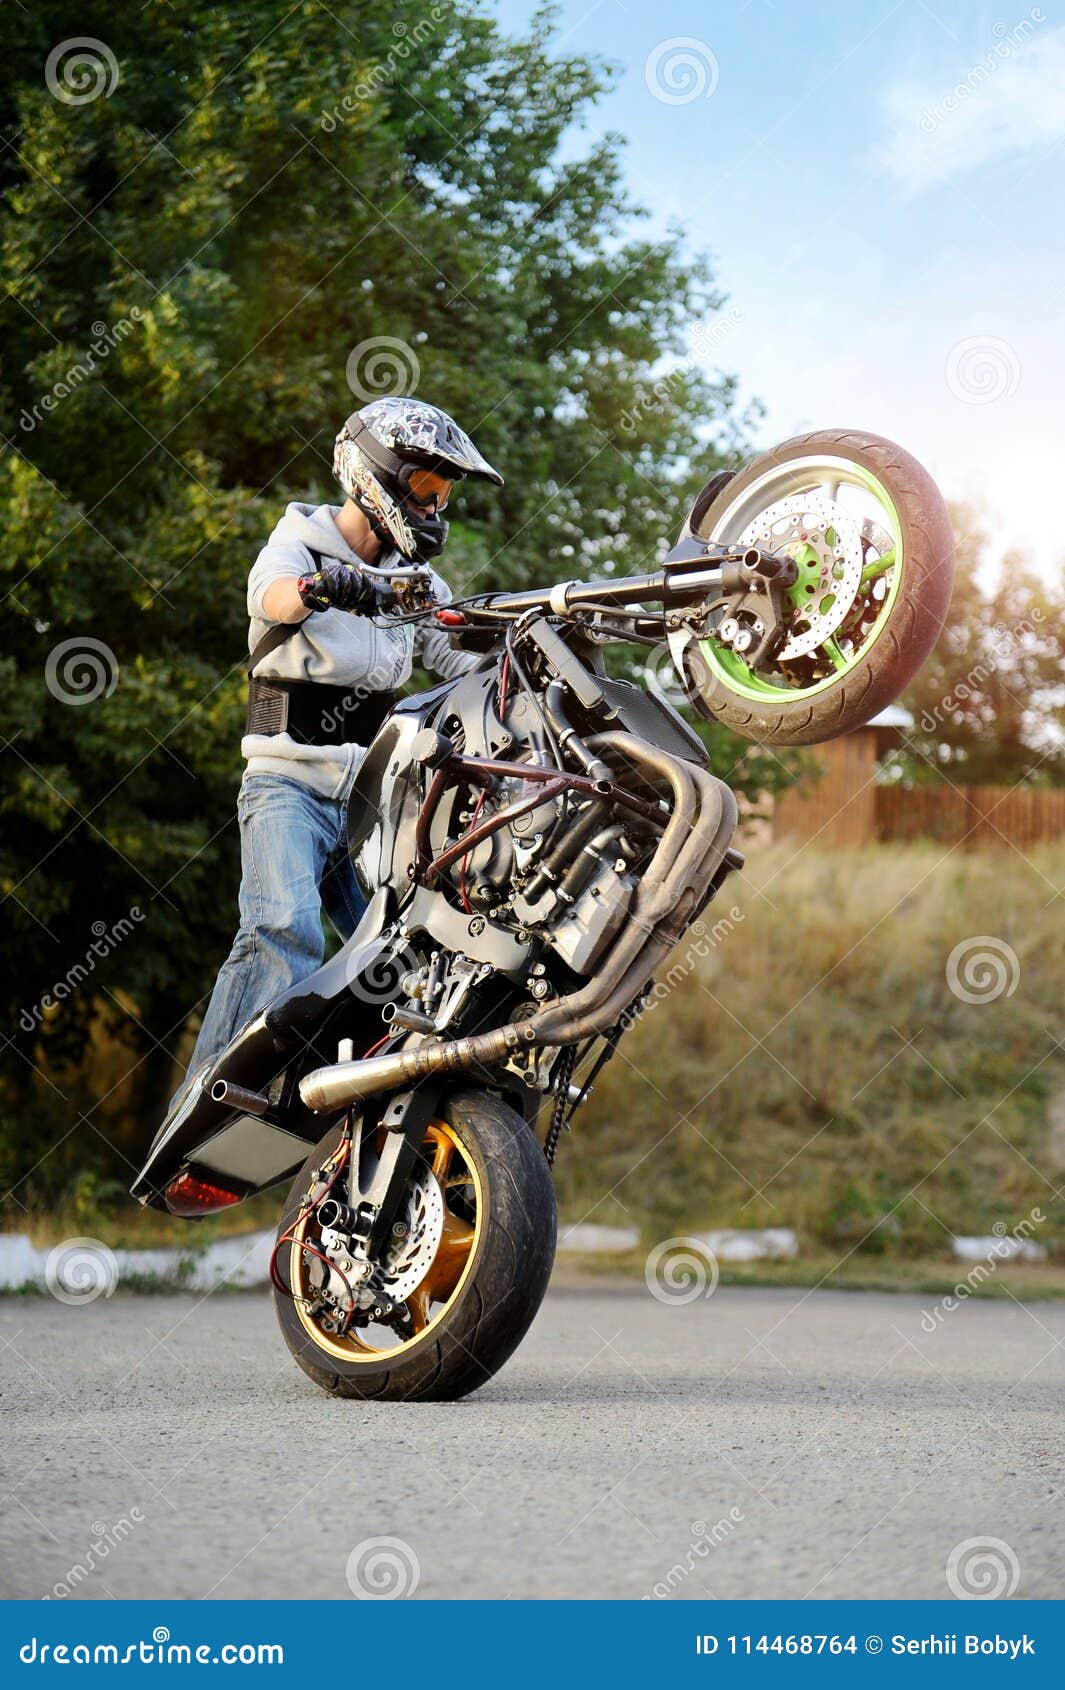 motorcycle on one wheel